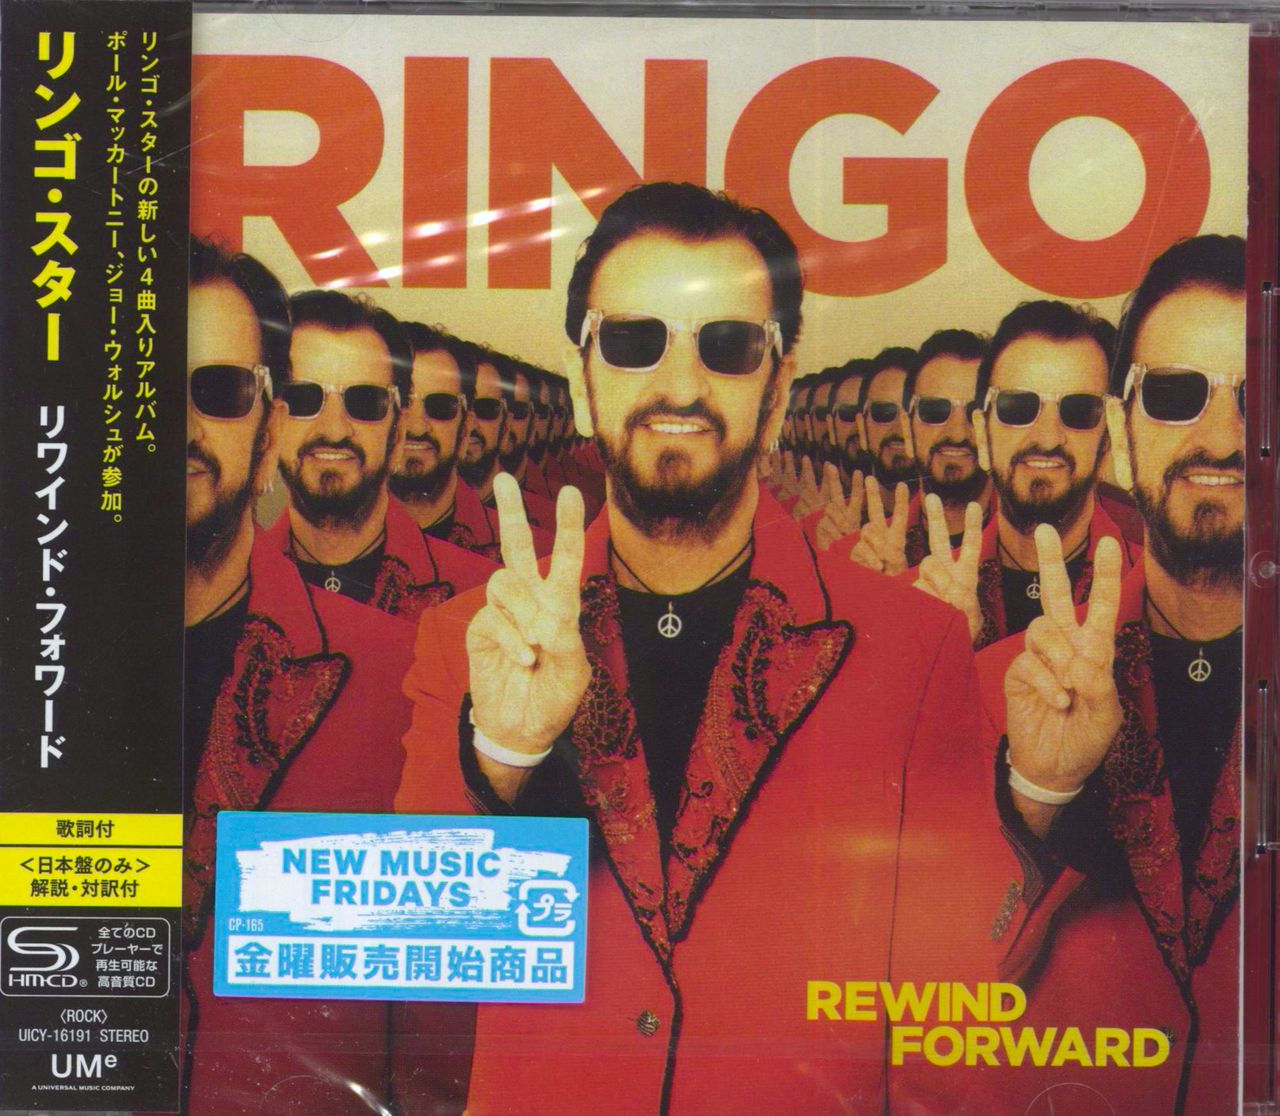 Ringo Starr Rewind Forward - SHM-CD - Sealed Japanese SHM CD 